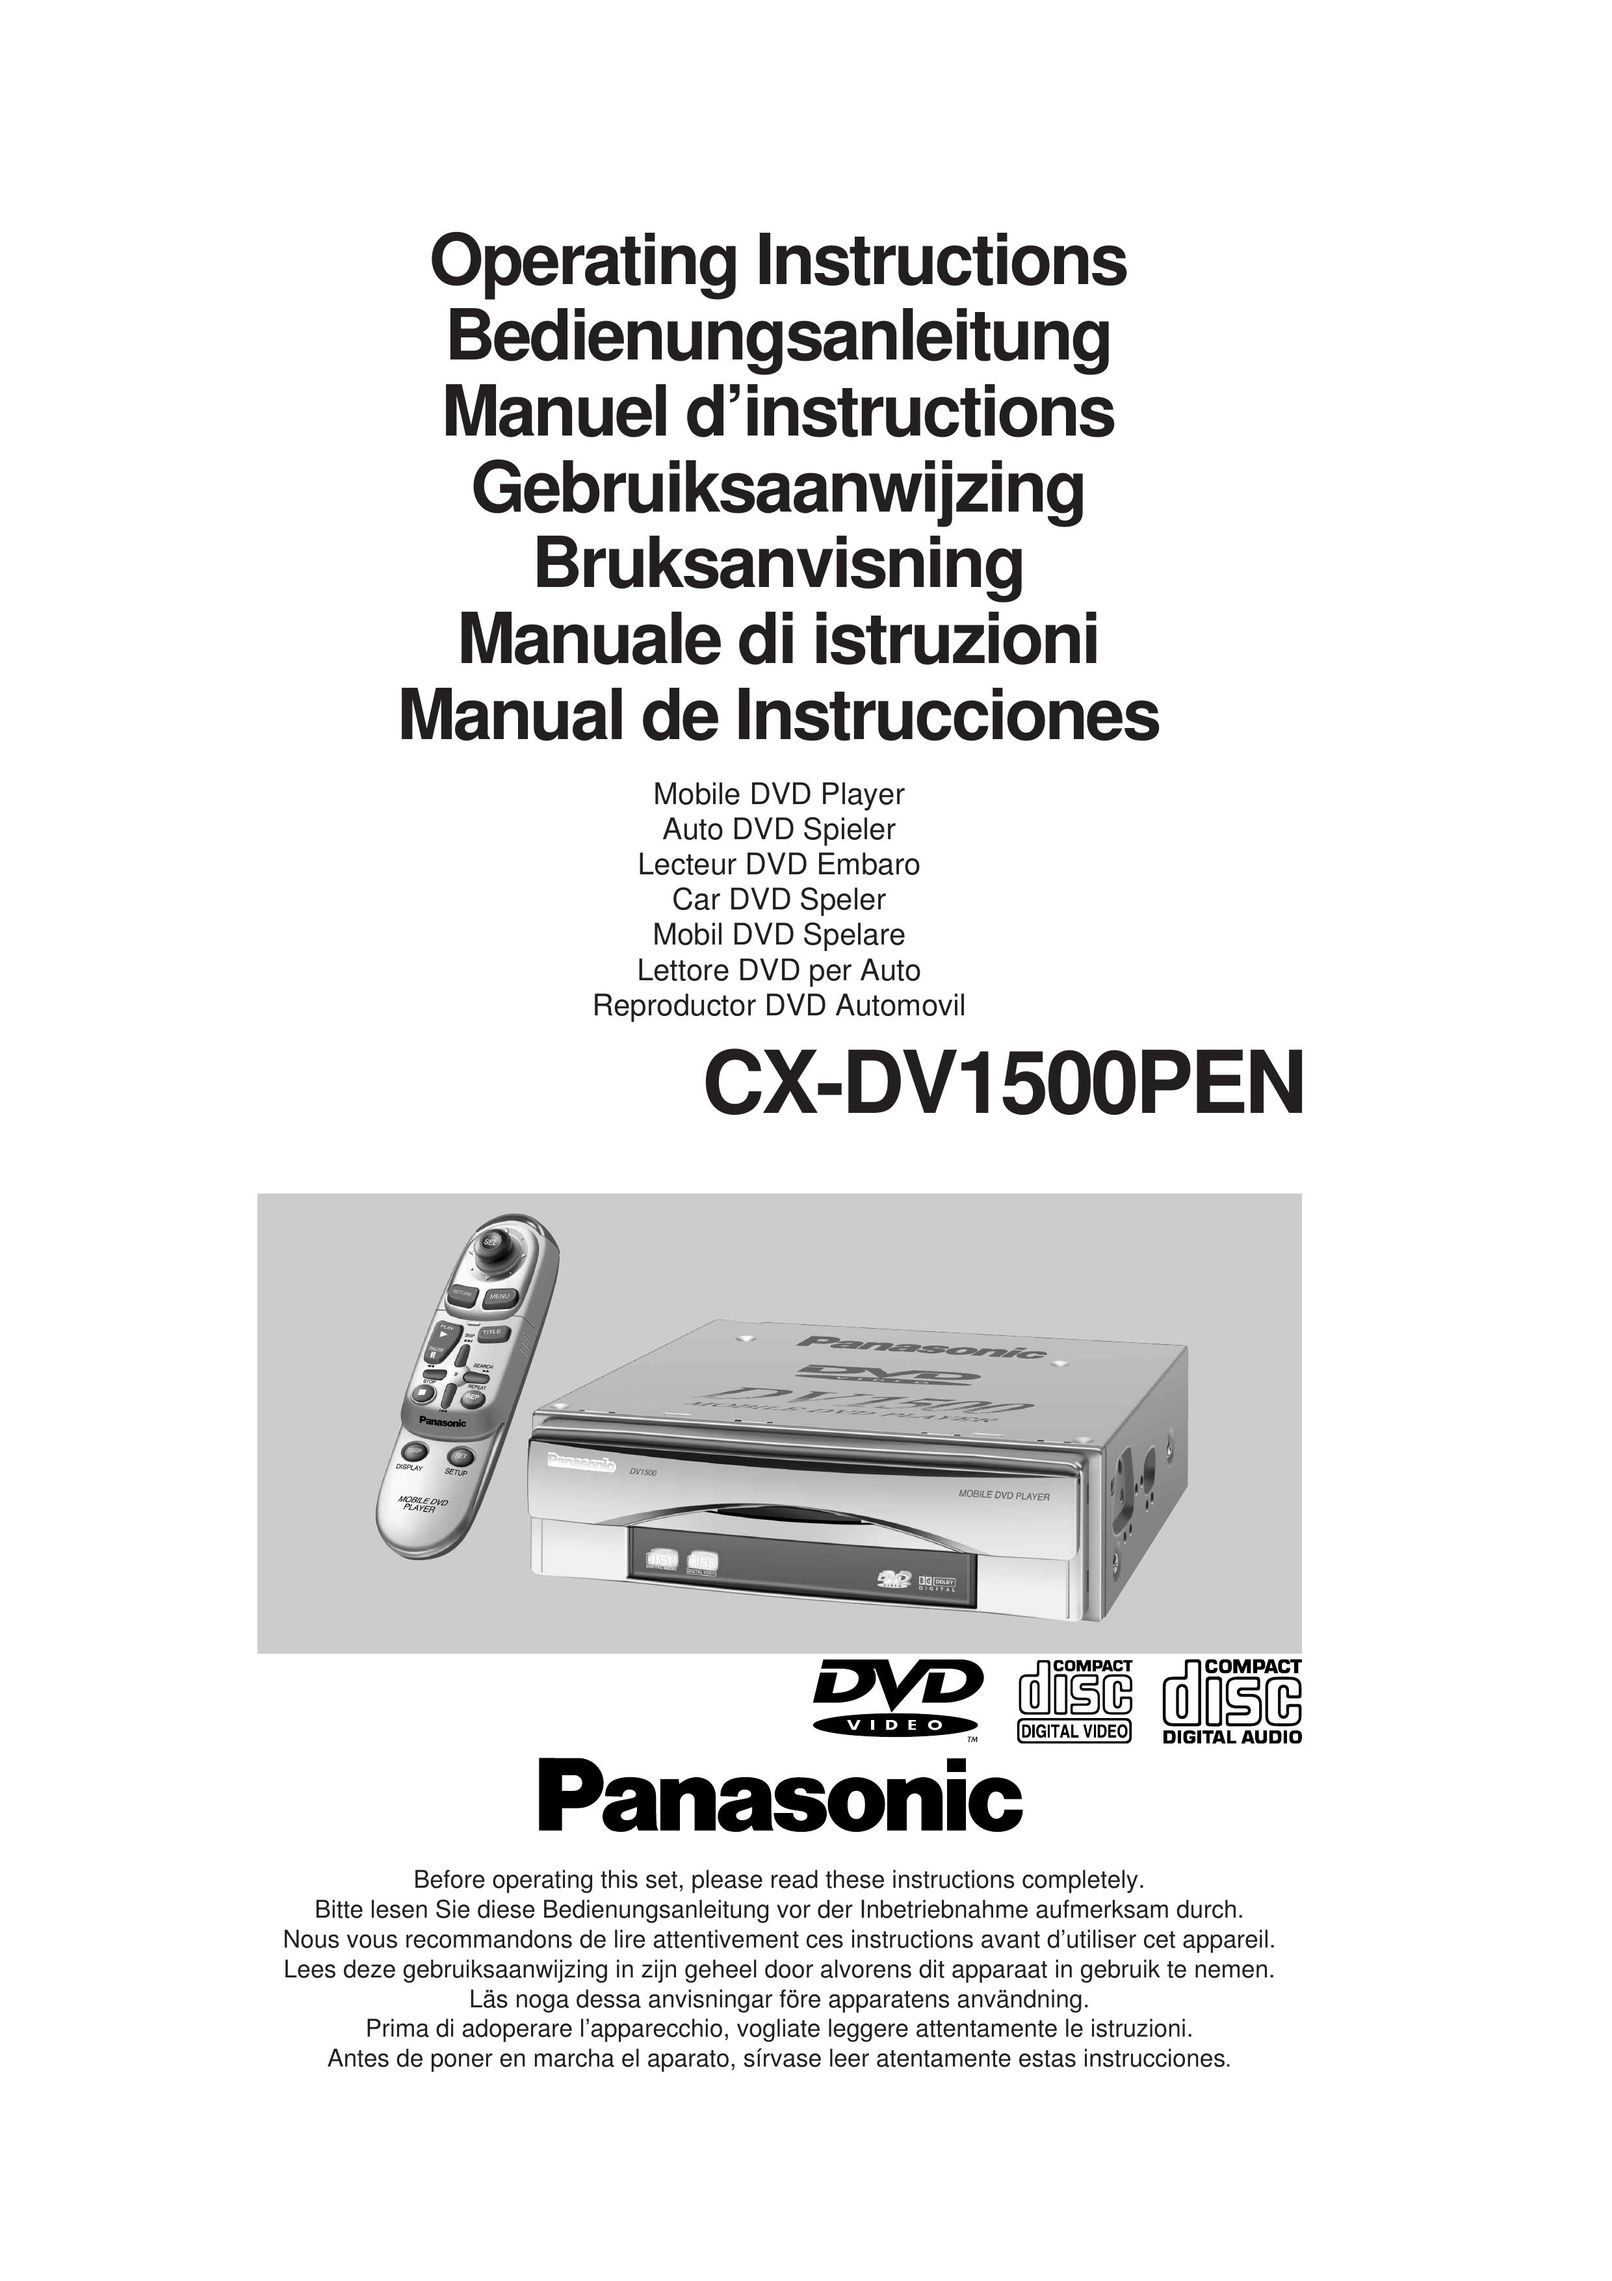 Panasonic CX-DV1500PEN DVD Player User Manual